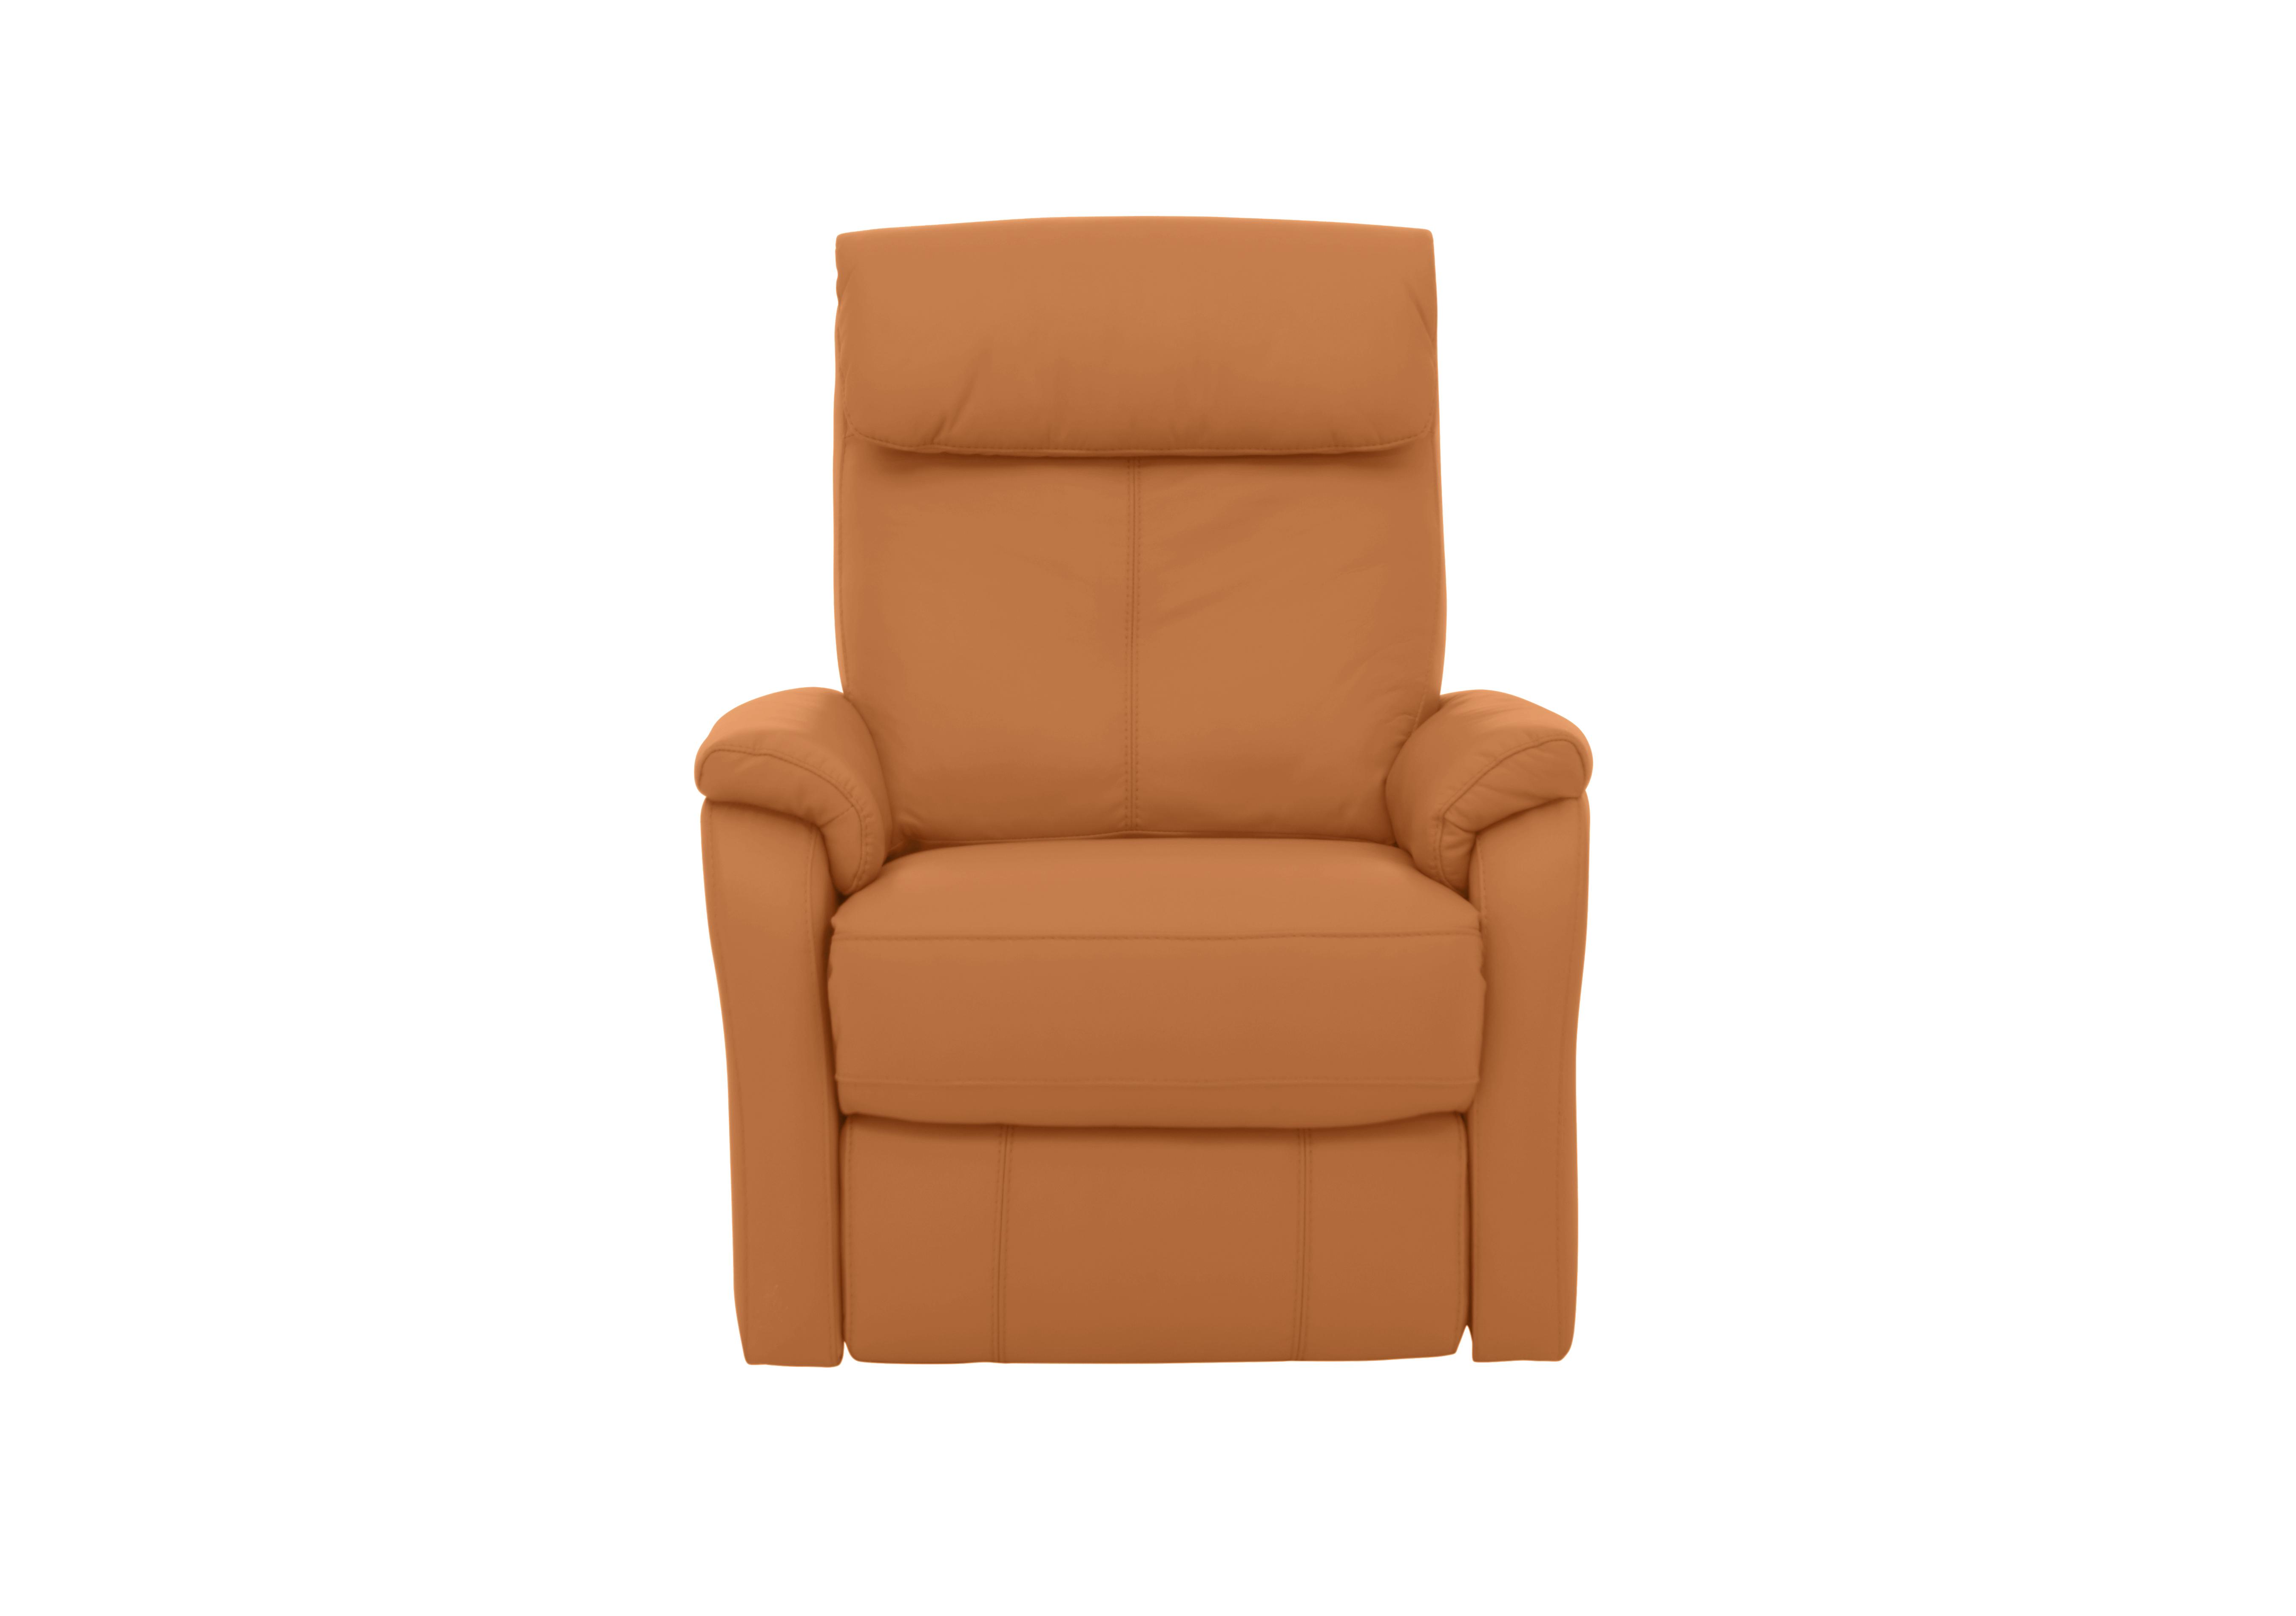 Rowan Leather Swivel Rocker Recliner Armchair in Bv-335e Honey Yellow on Furniture Village